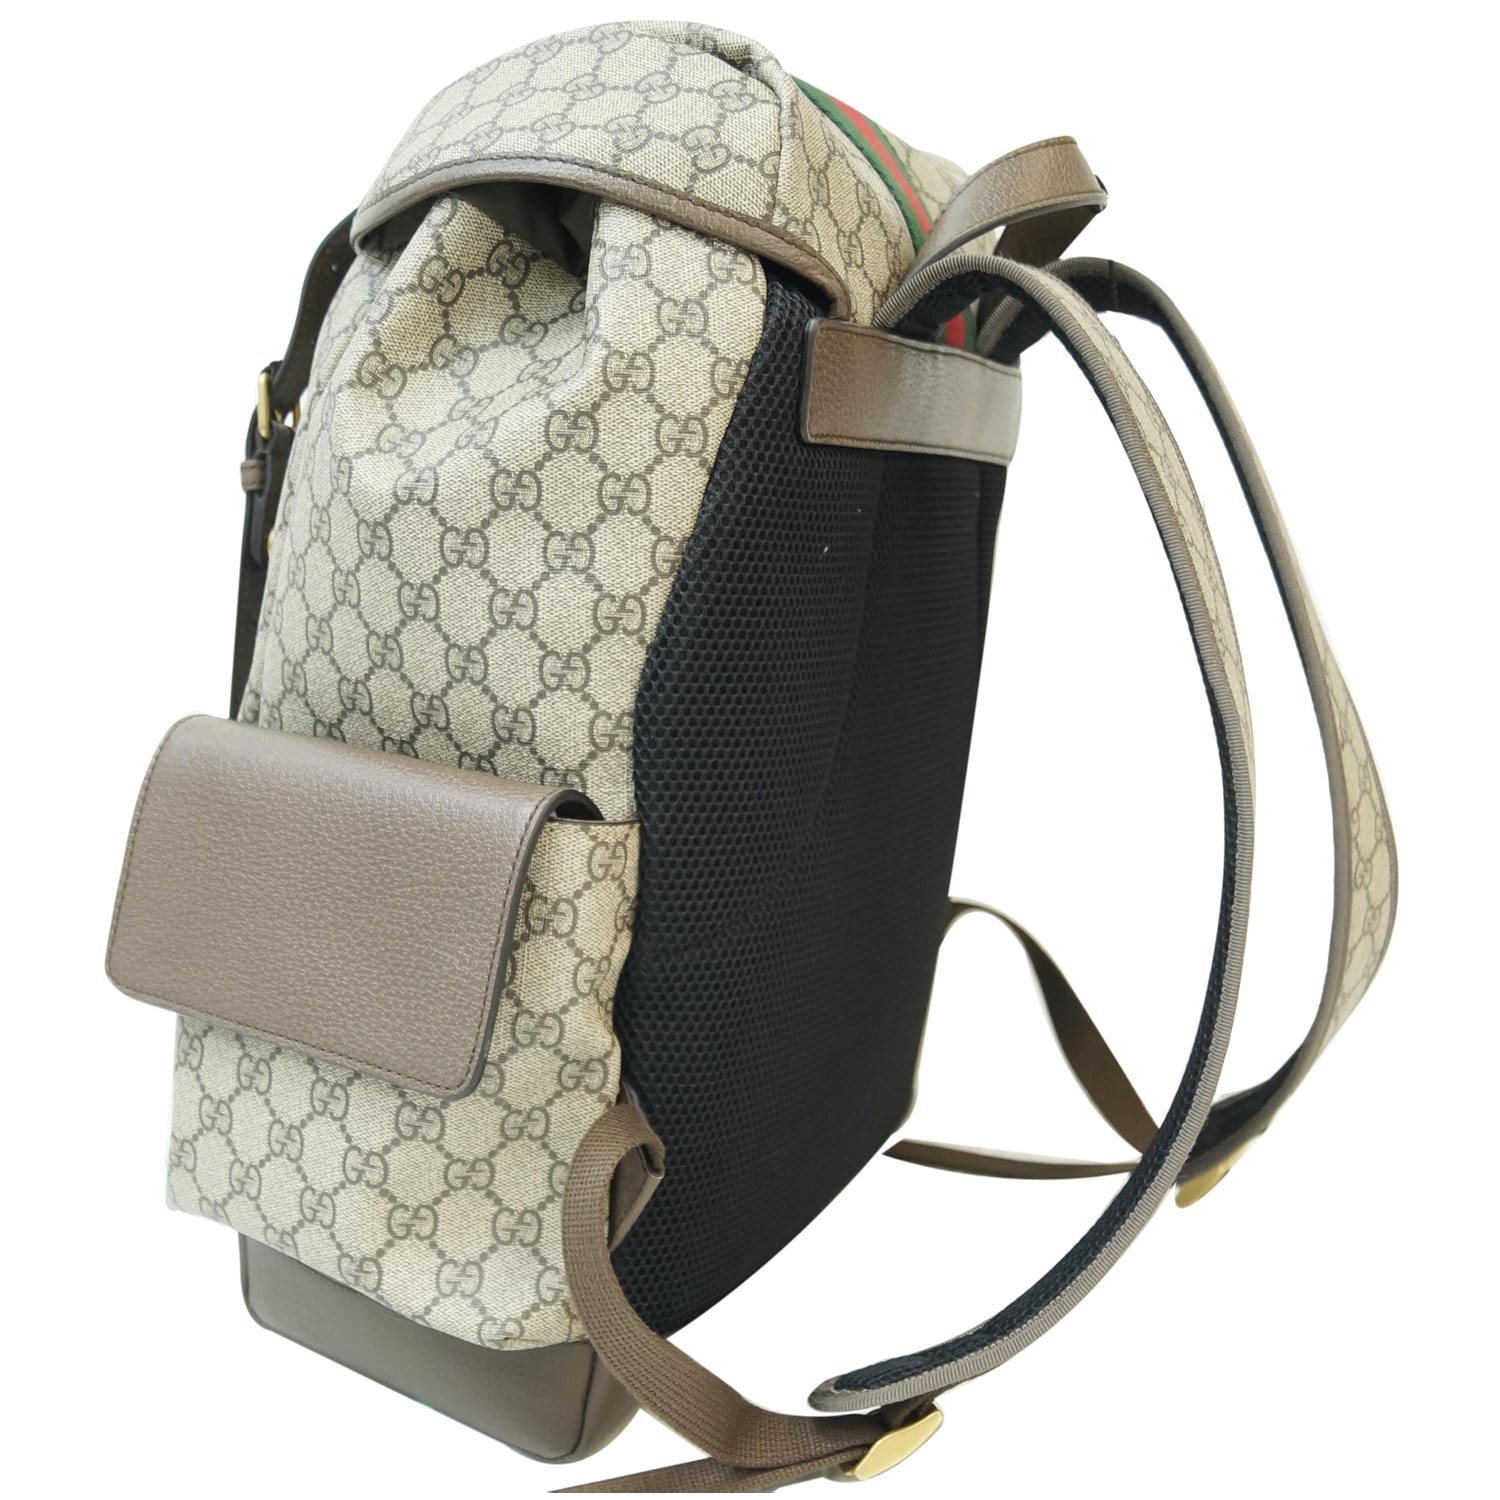 Ophidia GG medium backpack in beige and ebony Supreme